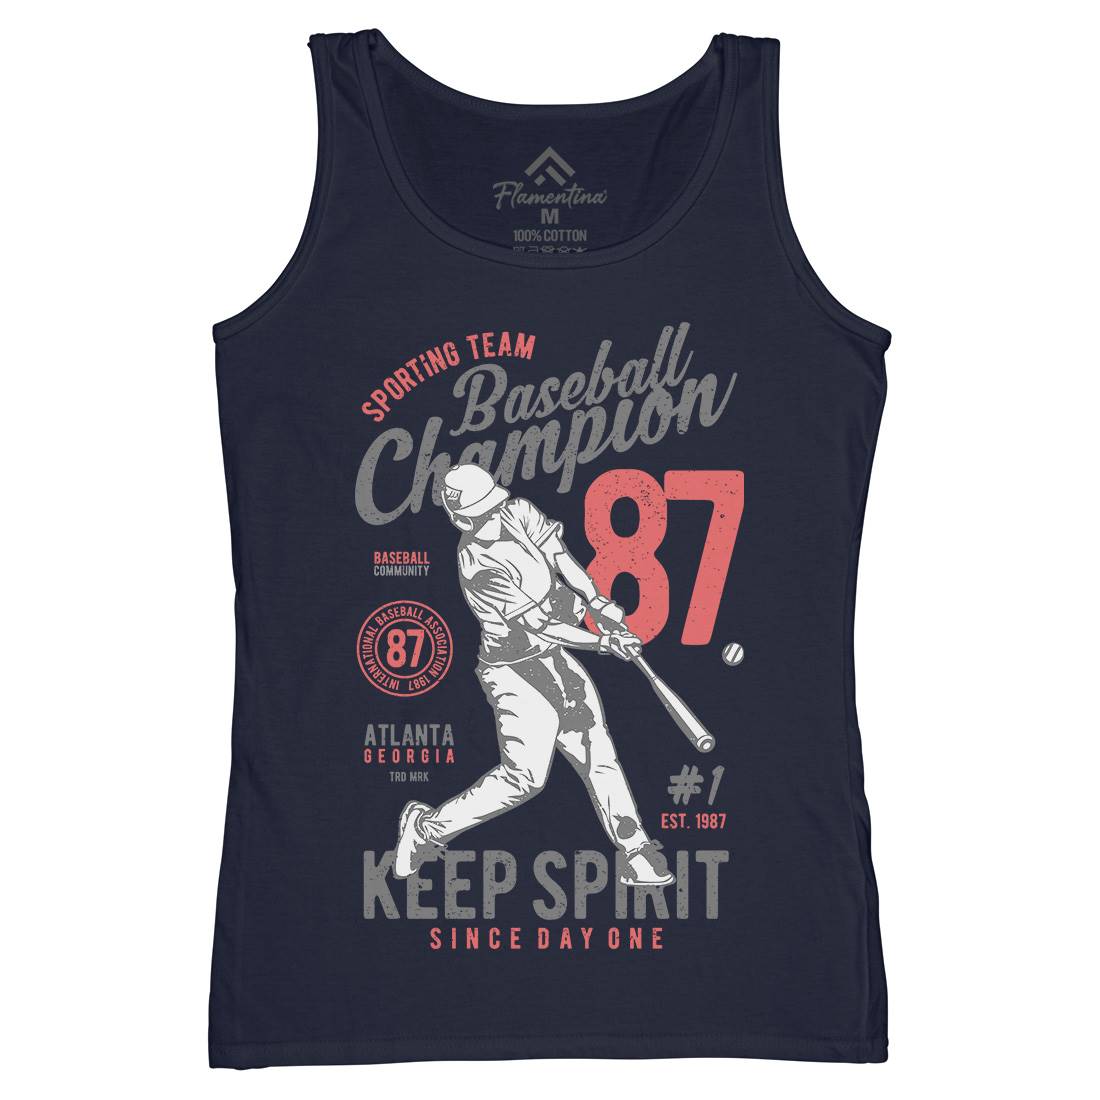 Baseball Champion Womens Organic Tank Top Vest Sport A616